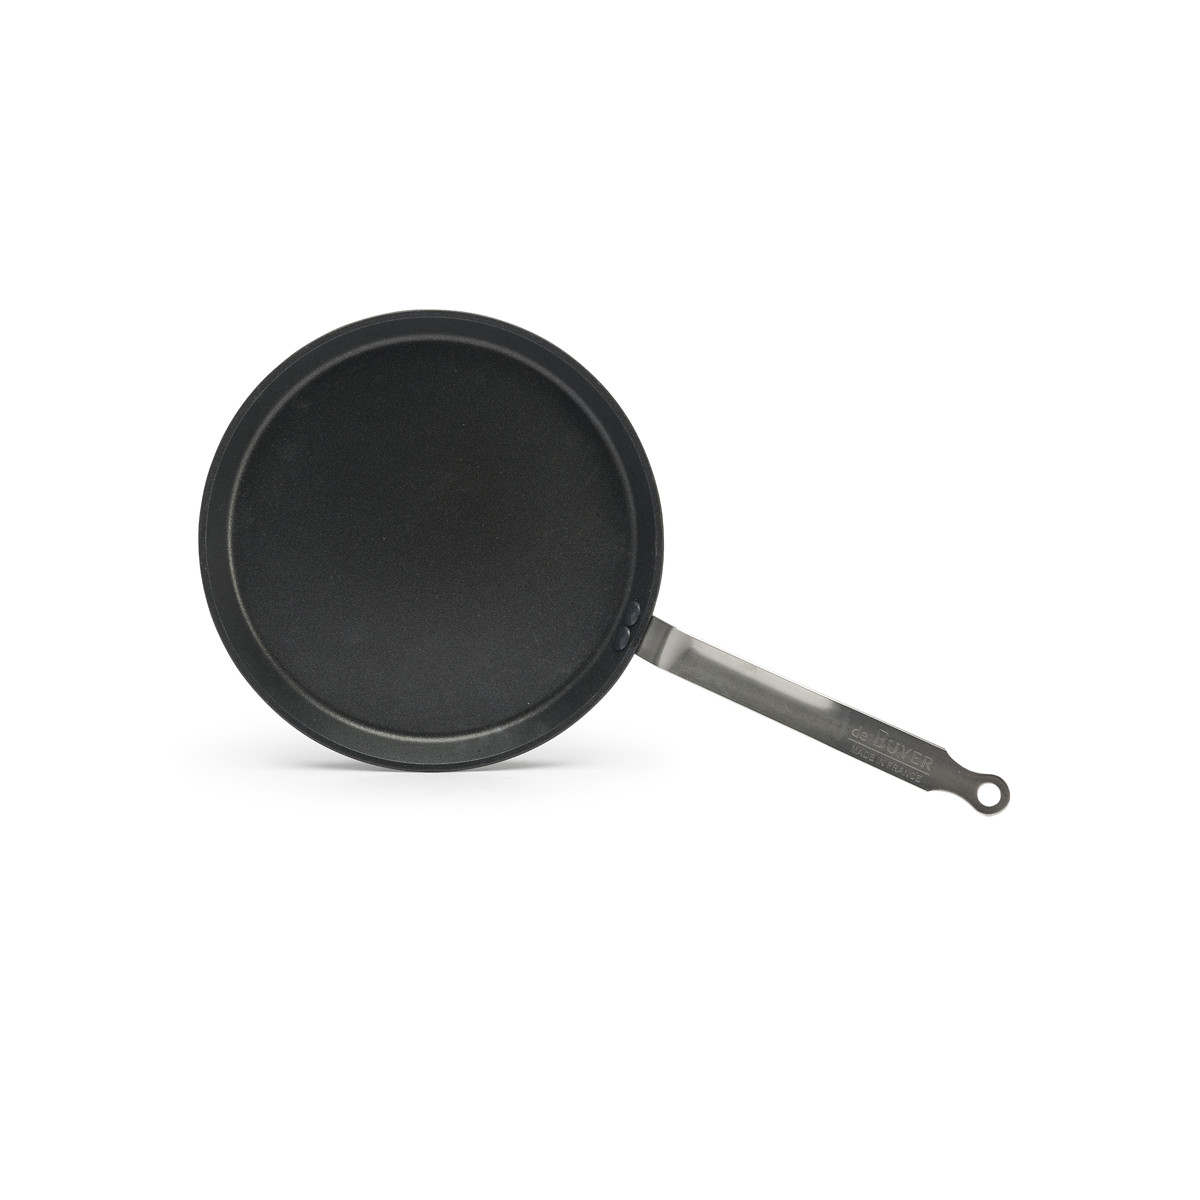 Festive Pancake Pan Red Non-Induction 25cm - Pyrex® Webshop EU